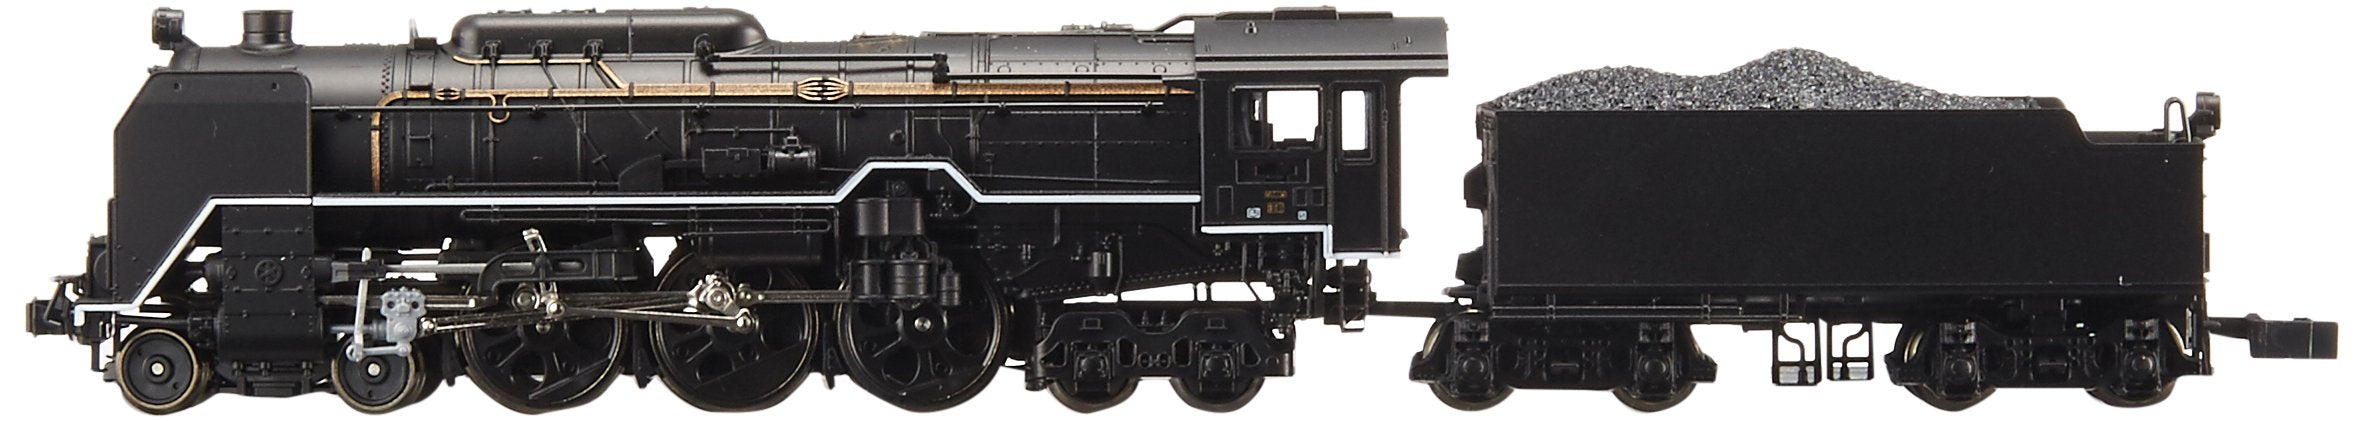 Kato N Gauge Railway Model Steam Locomotive 2017-5 C62 Sanyo Kure Line